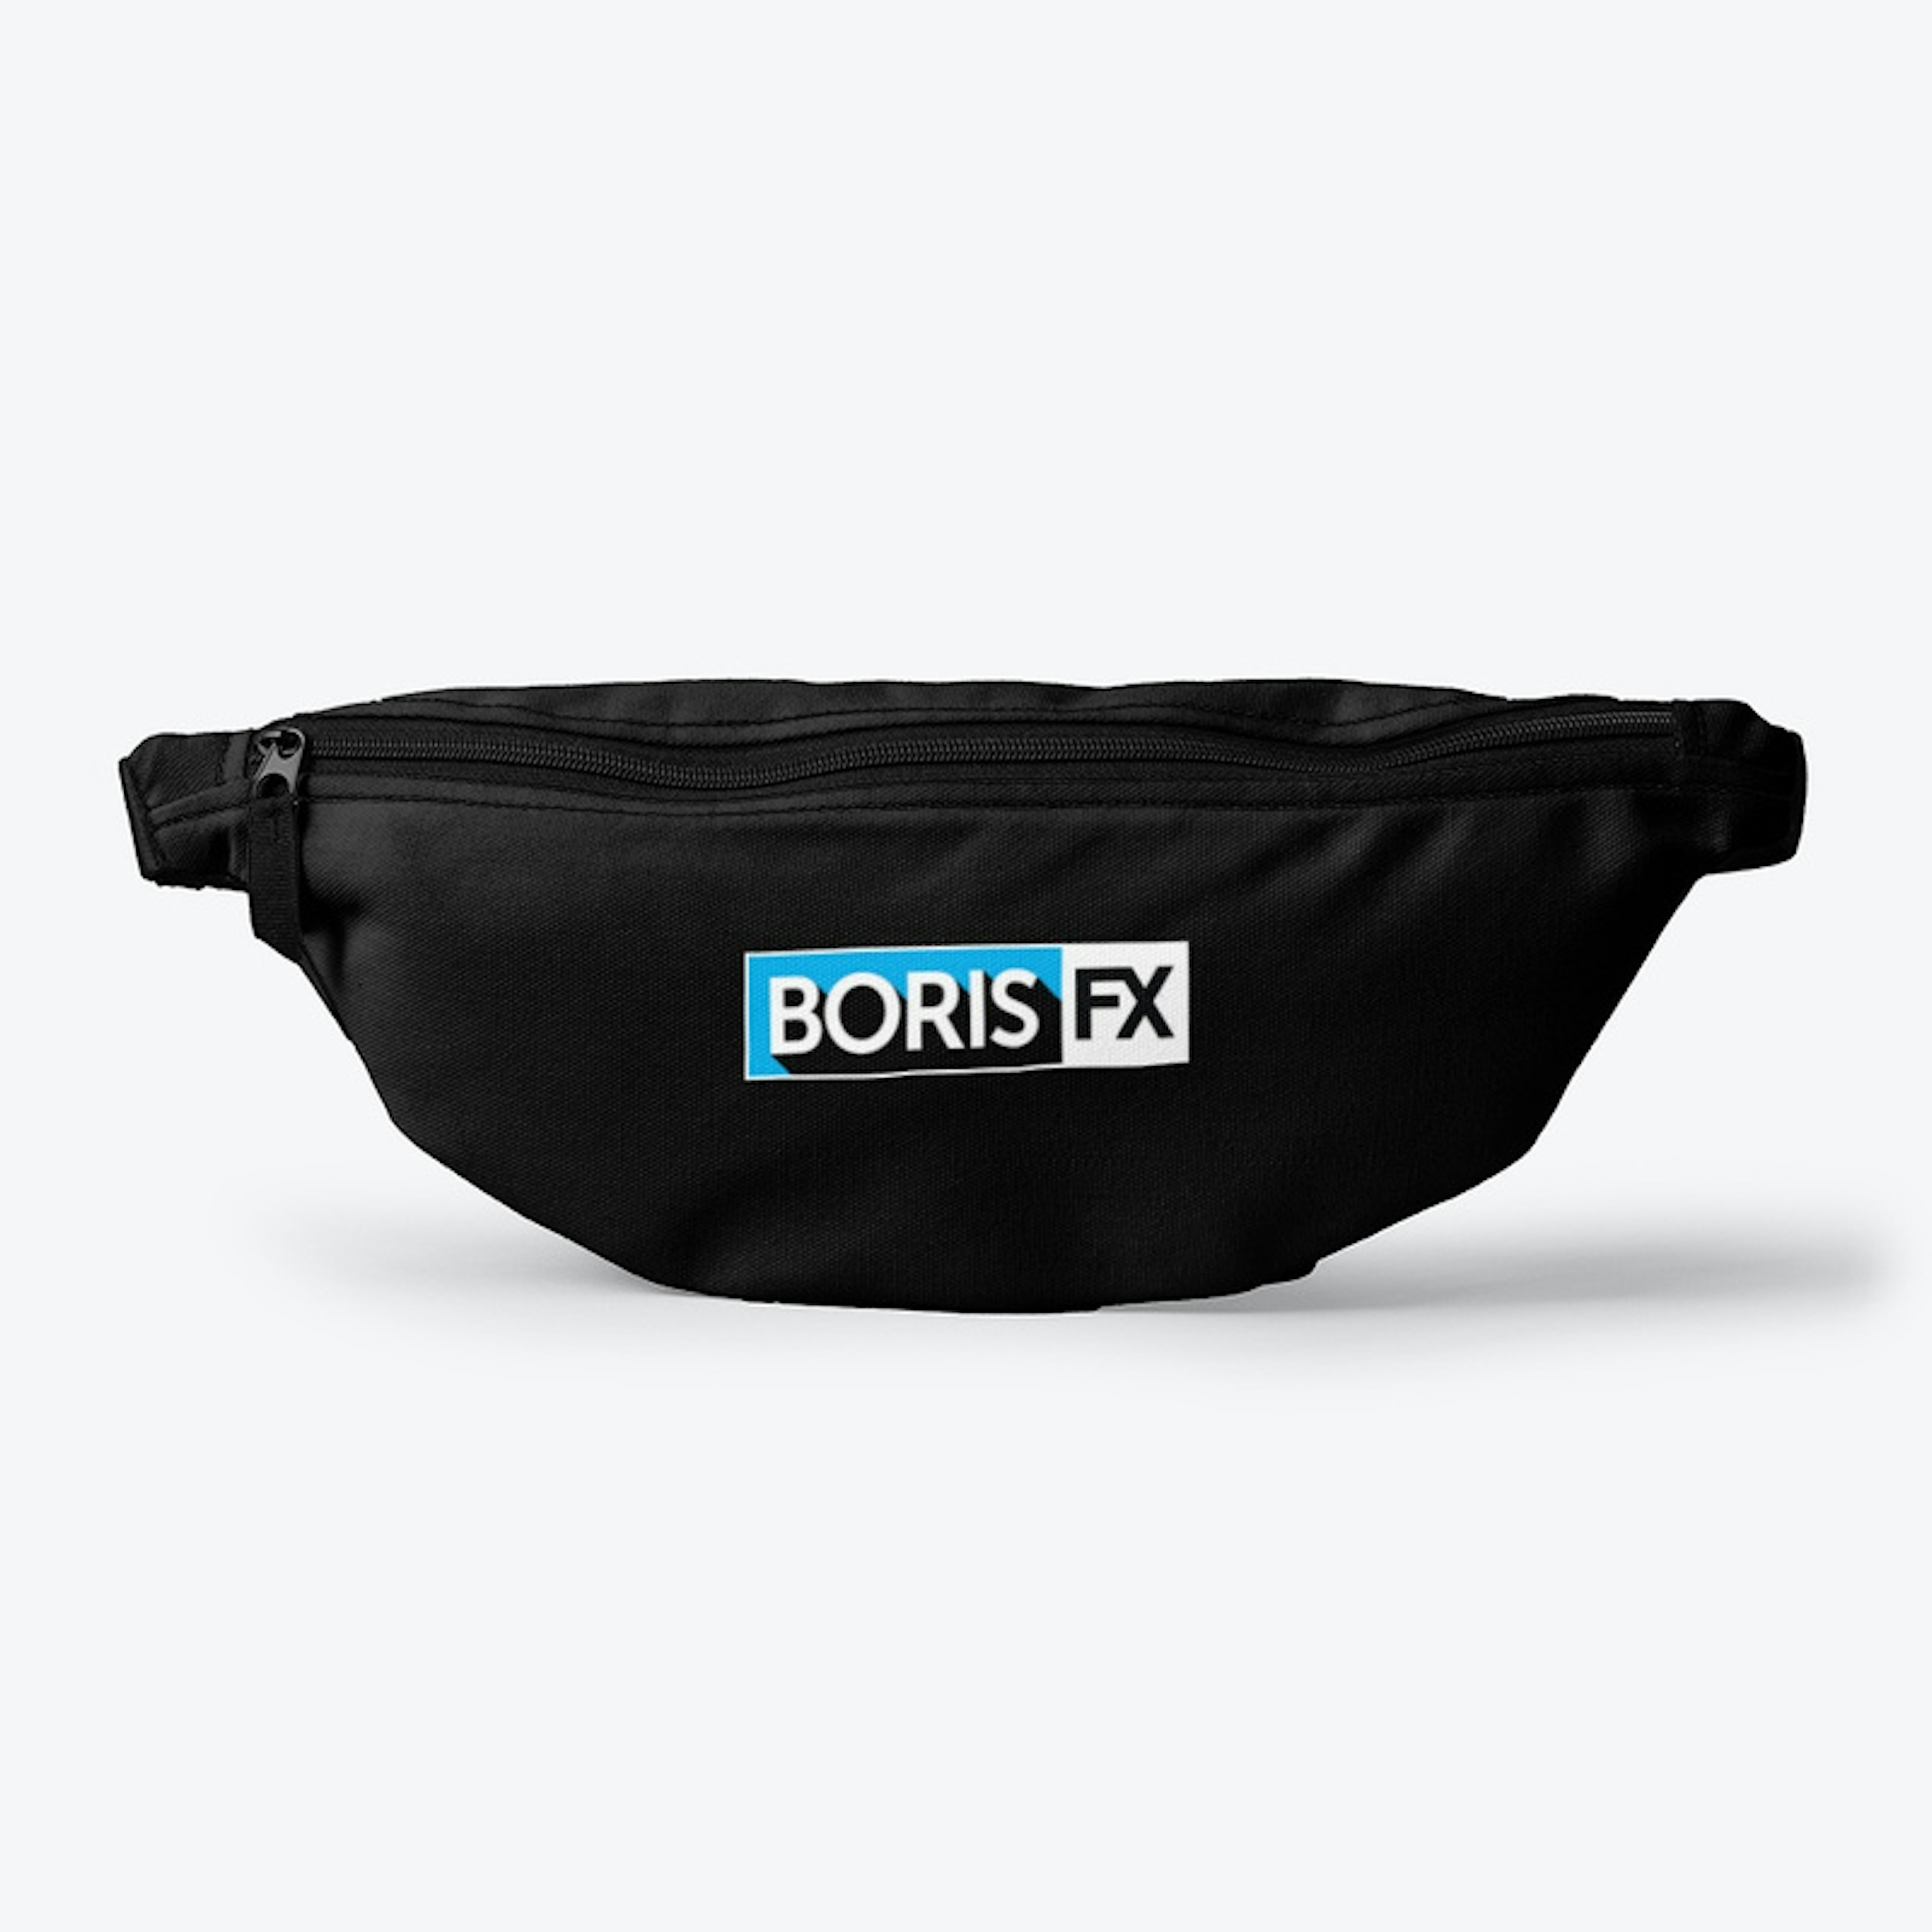 Boris FX Travel Pack